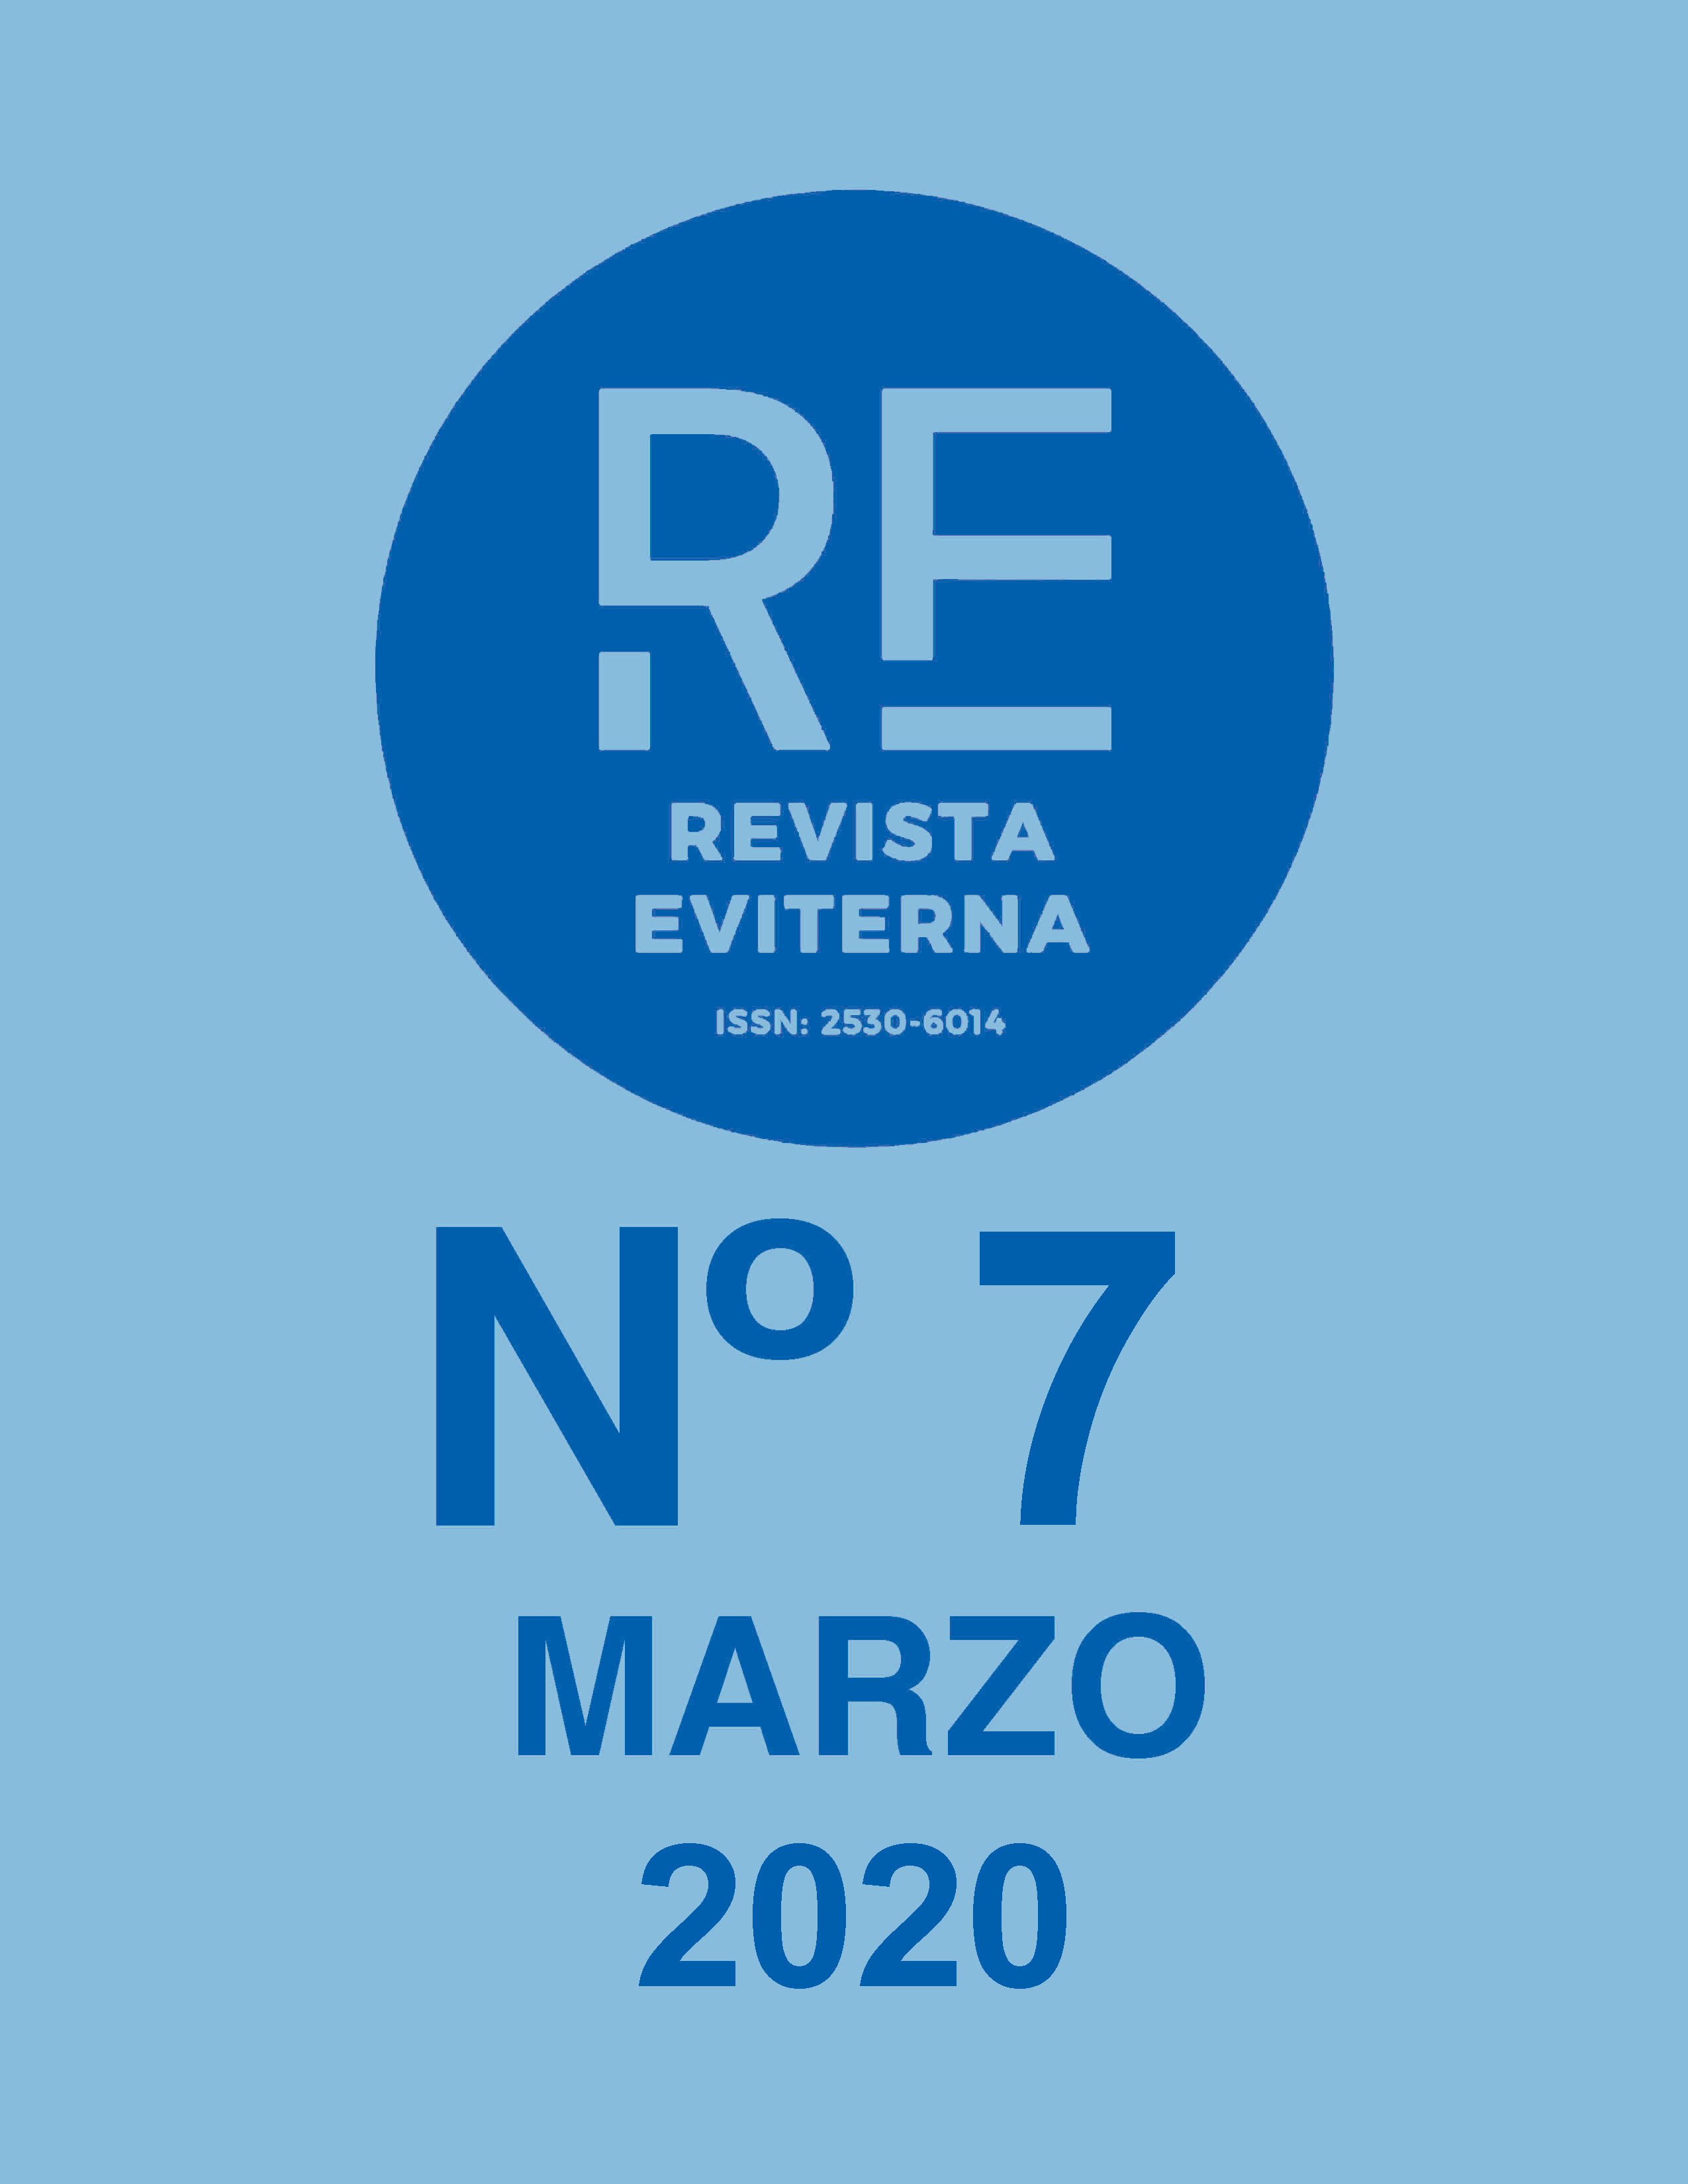 					View No. 7 (2020): Revista Eviterna Nº 7, marzo 2020
				